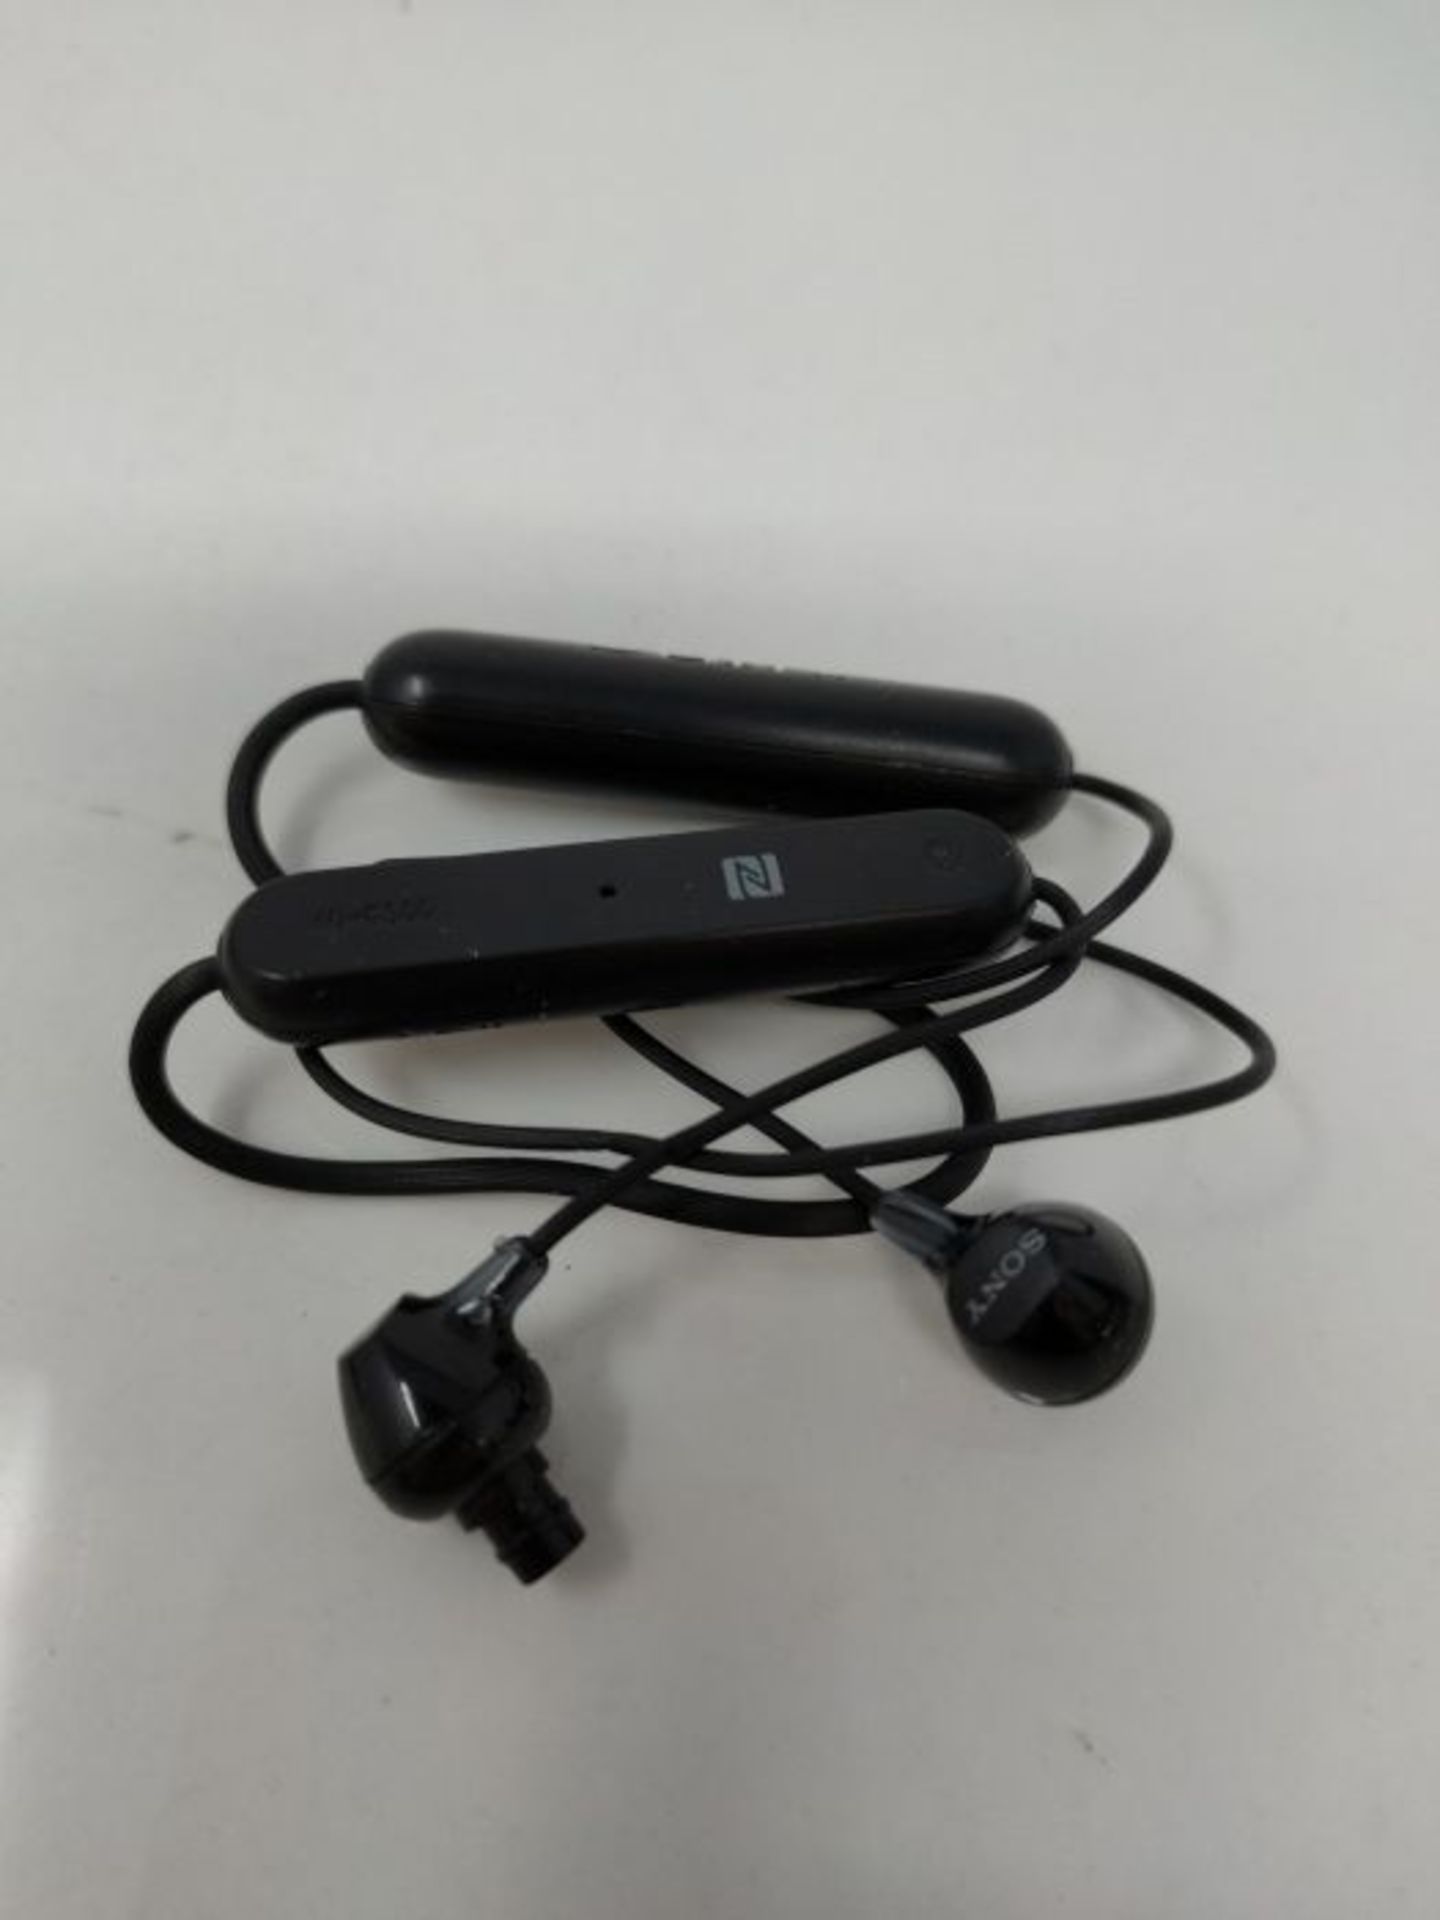 Sony WI-C300 Intrauricolare senza Fili, Bluetooth, Nero - Image 6 of 6